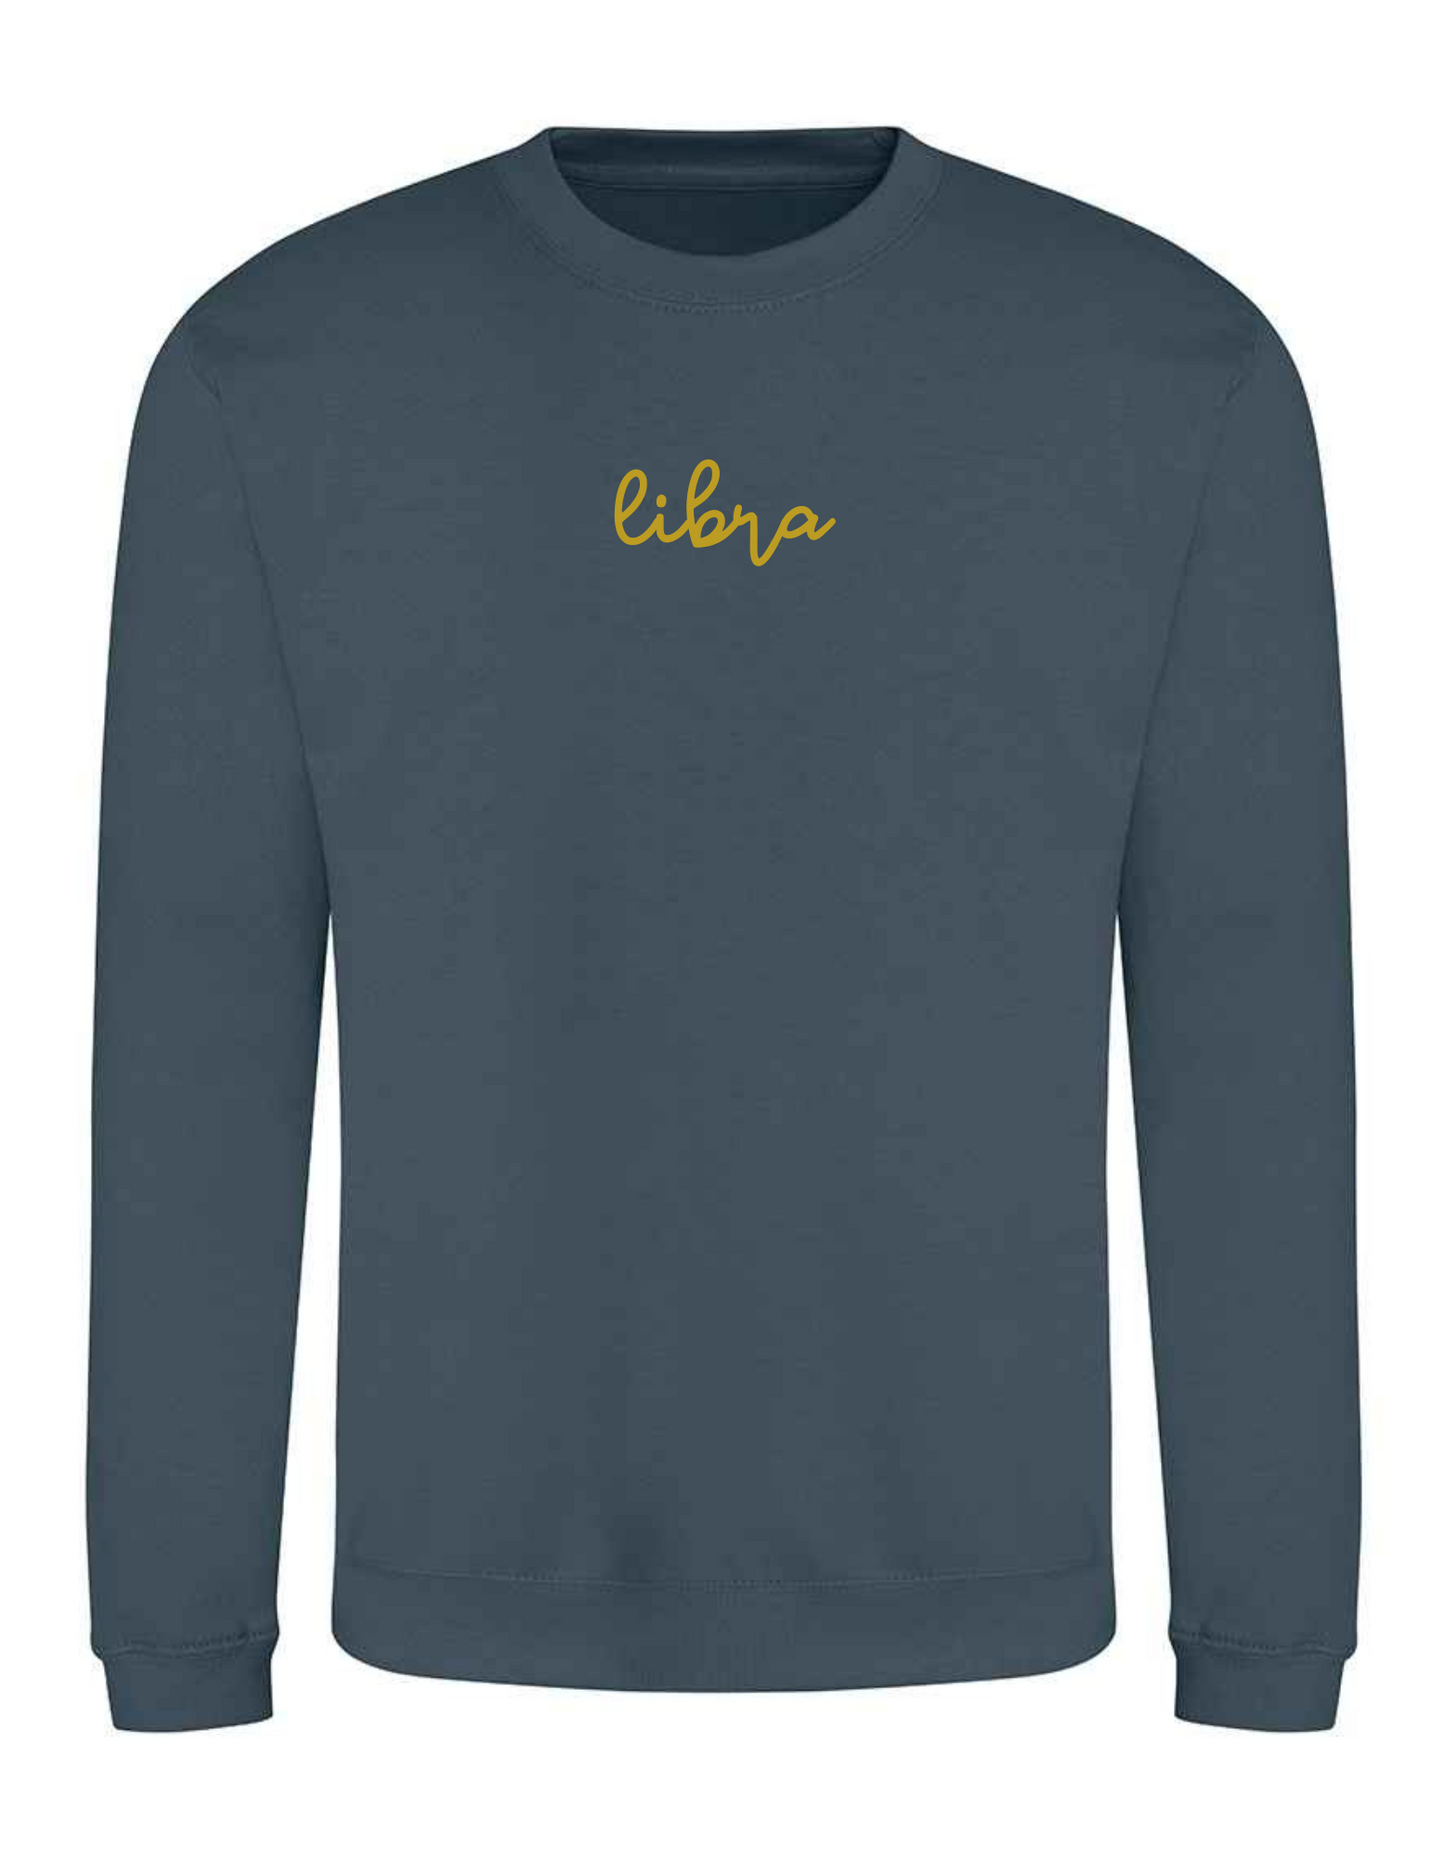 Crew neck sweater with zodiac Libra design